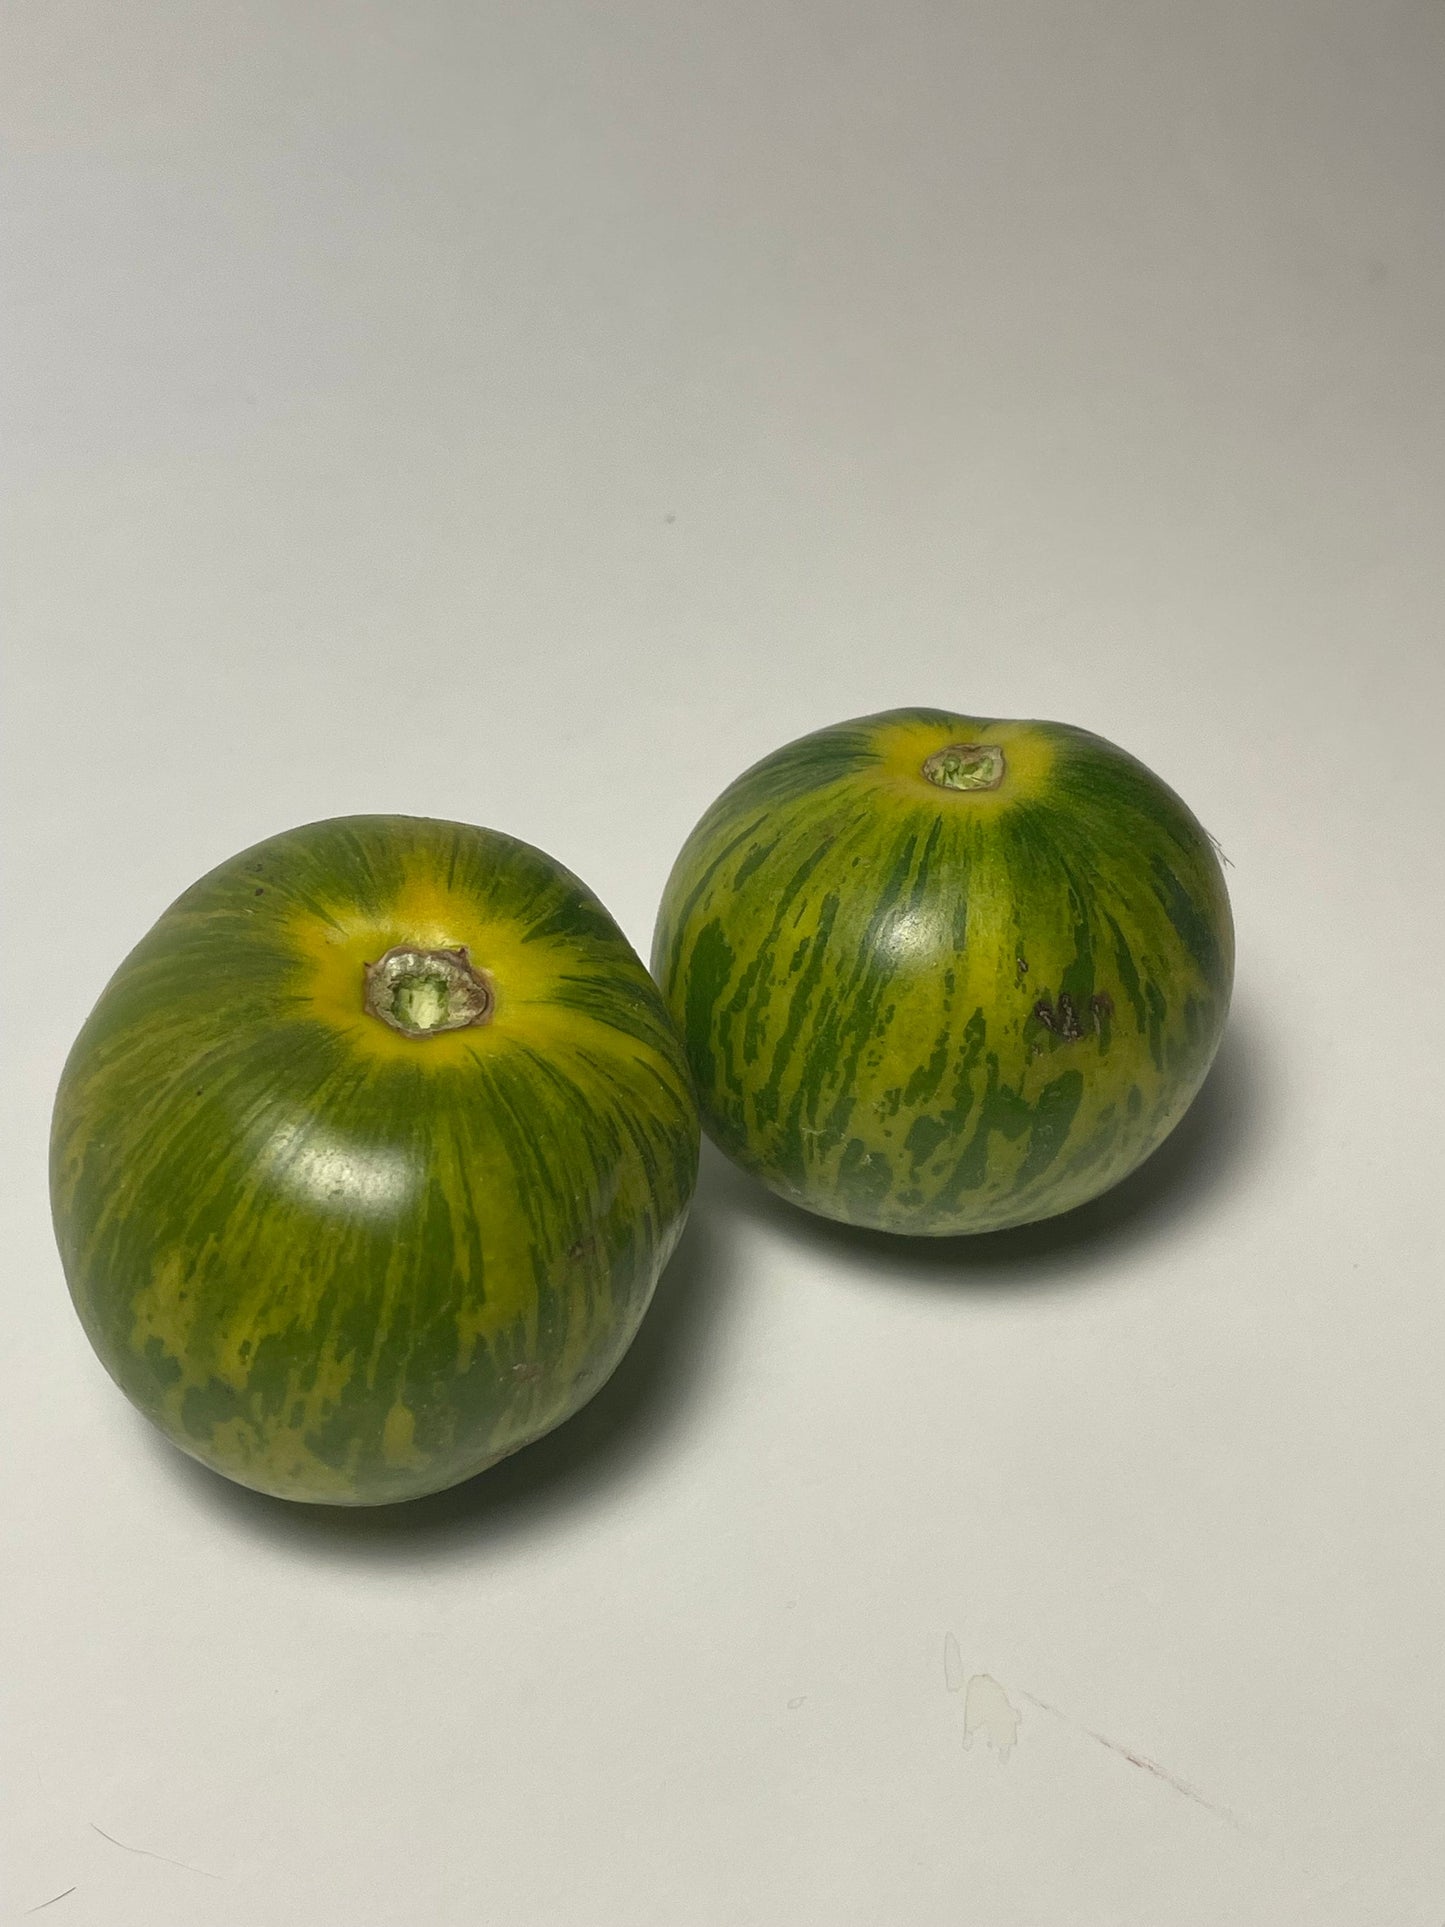 Green Zebra - Tomato Seeds - Heirloom Tomato - 25+ Seeds